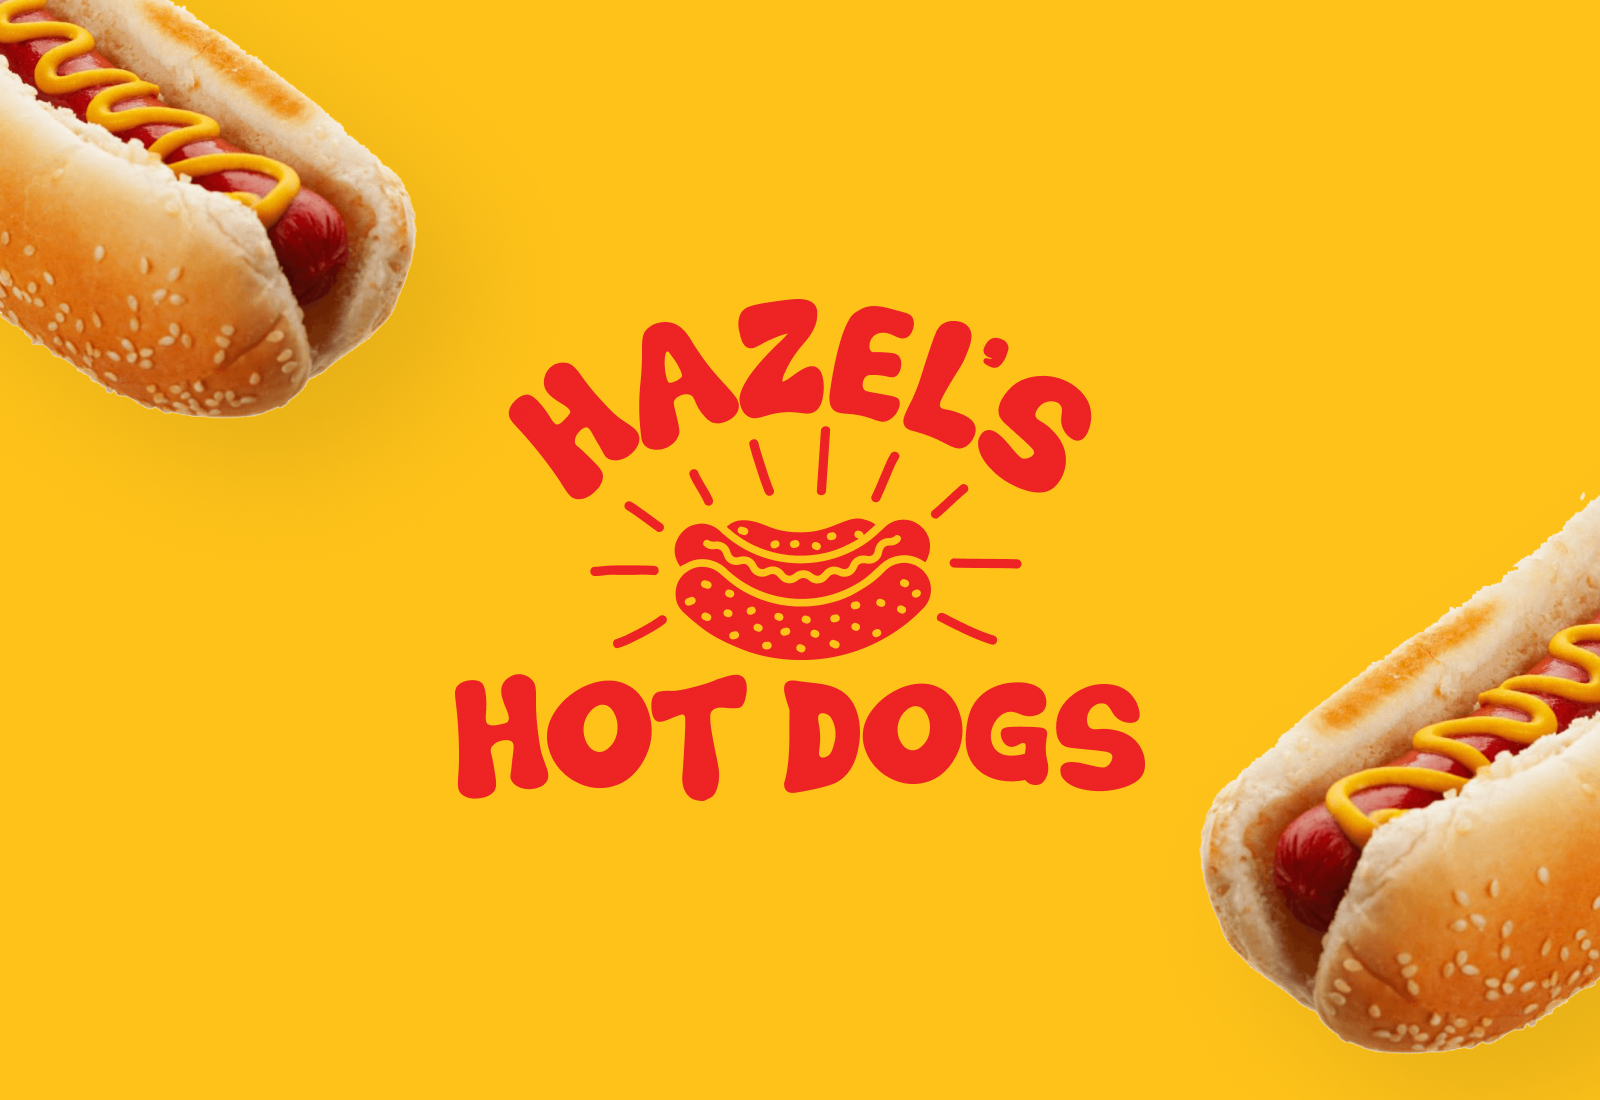 Primary Logo | Hazel's Hot Dogs